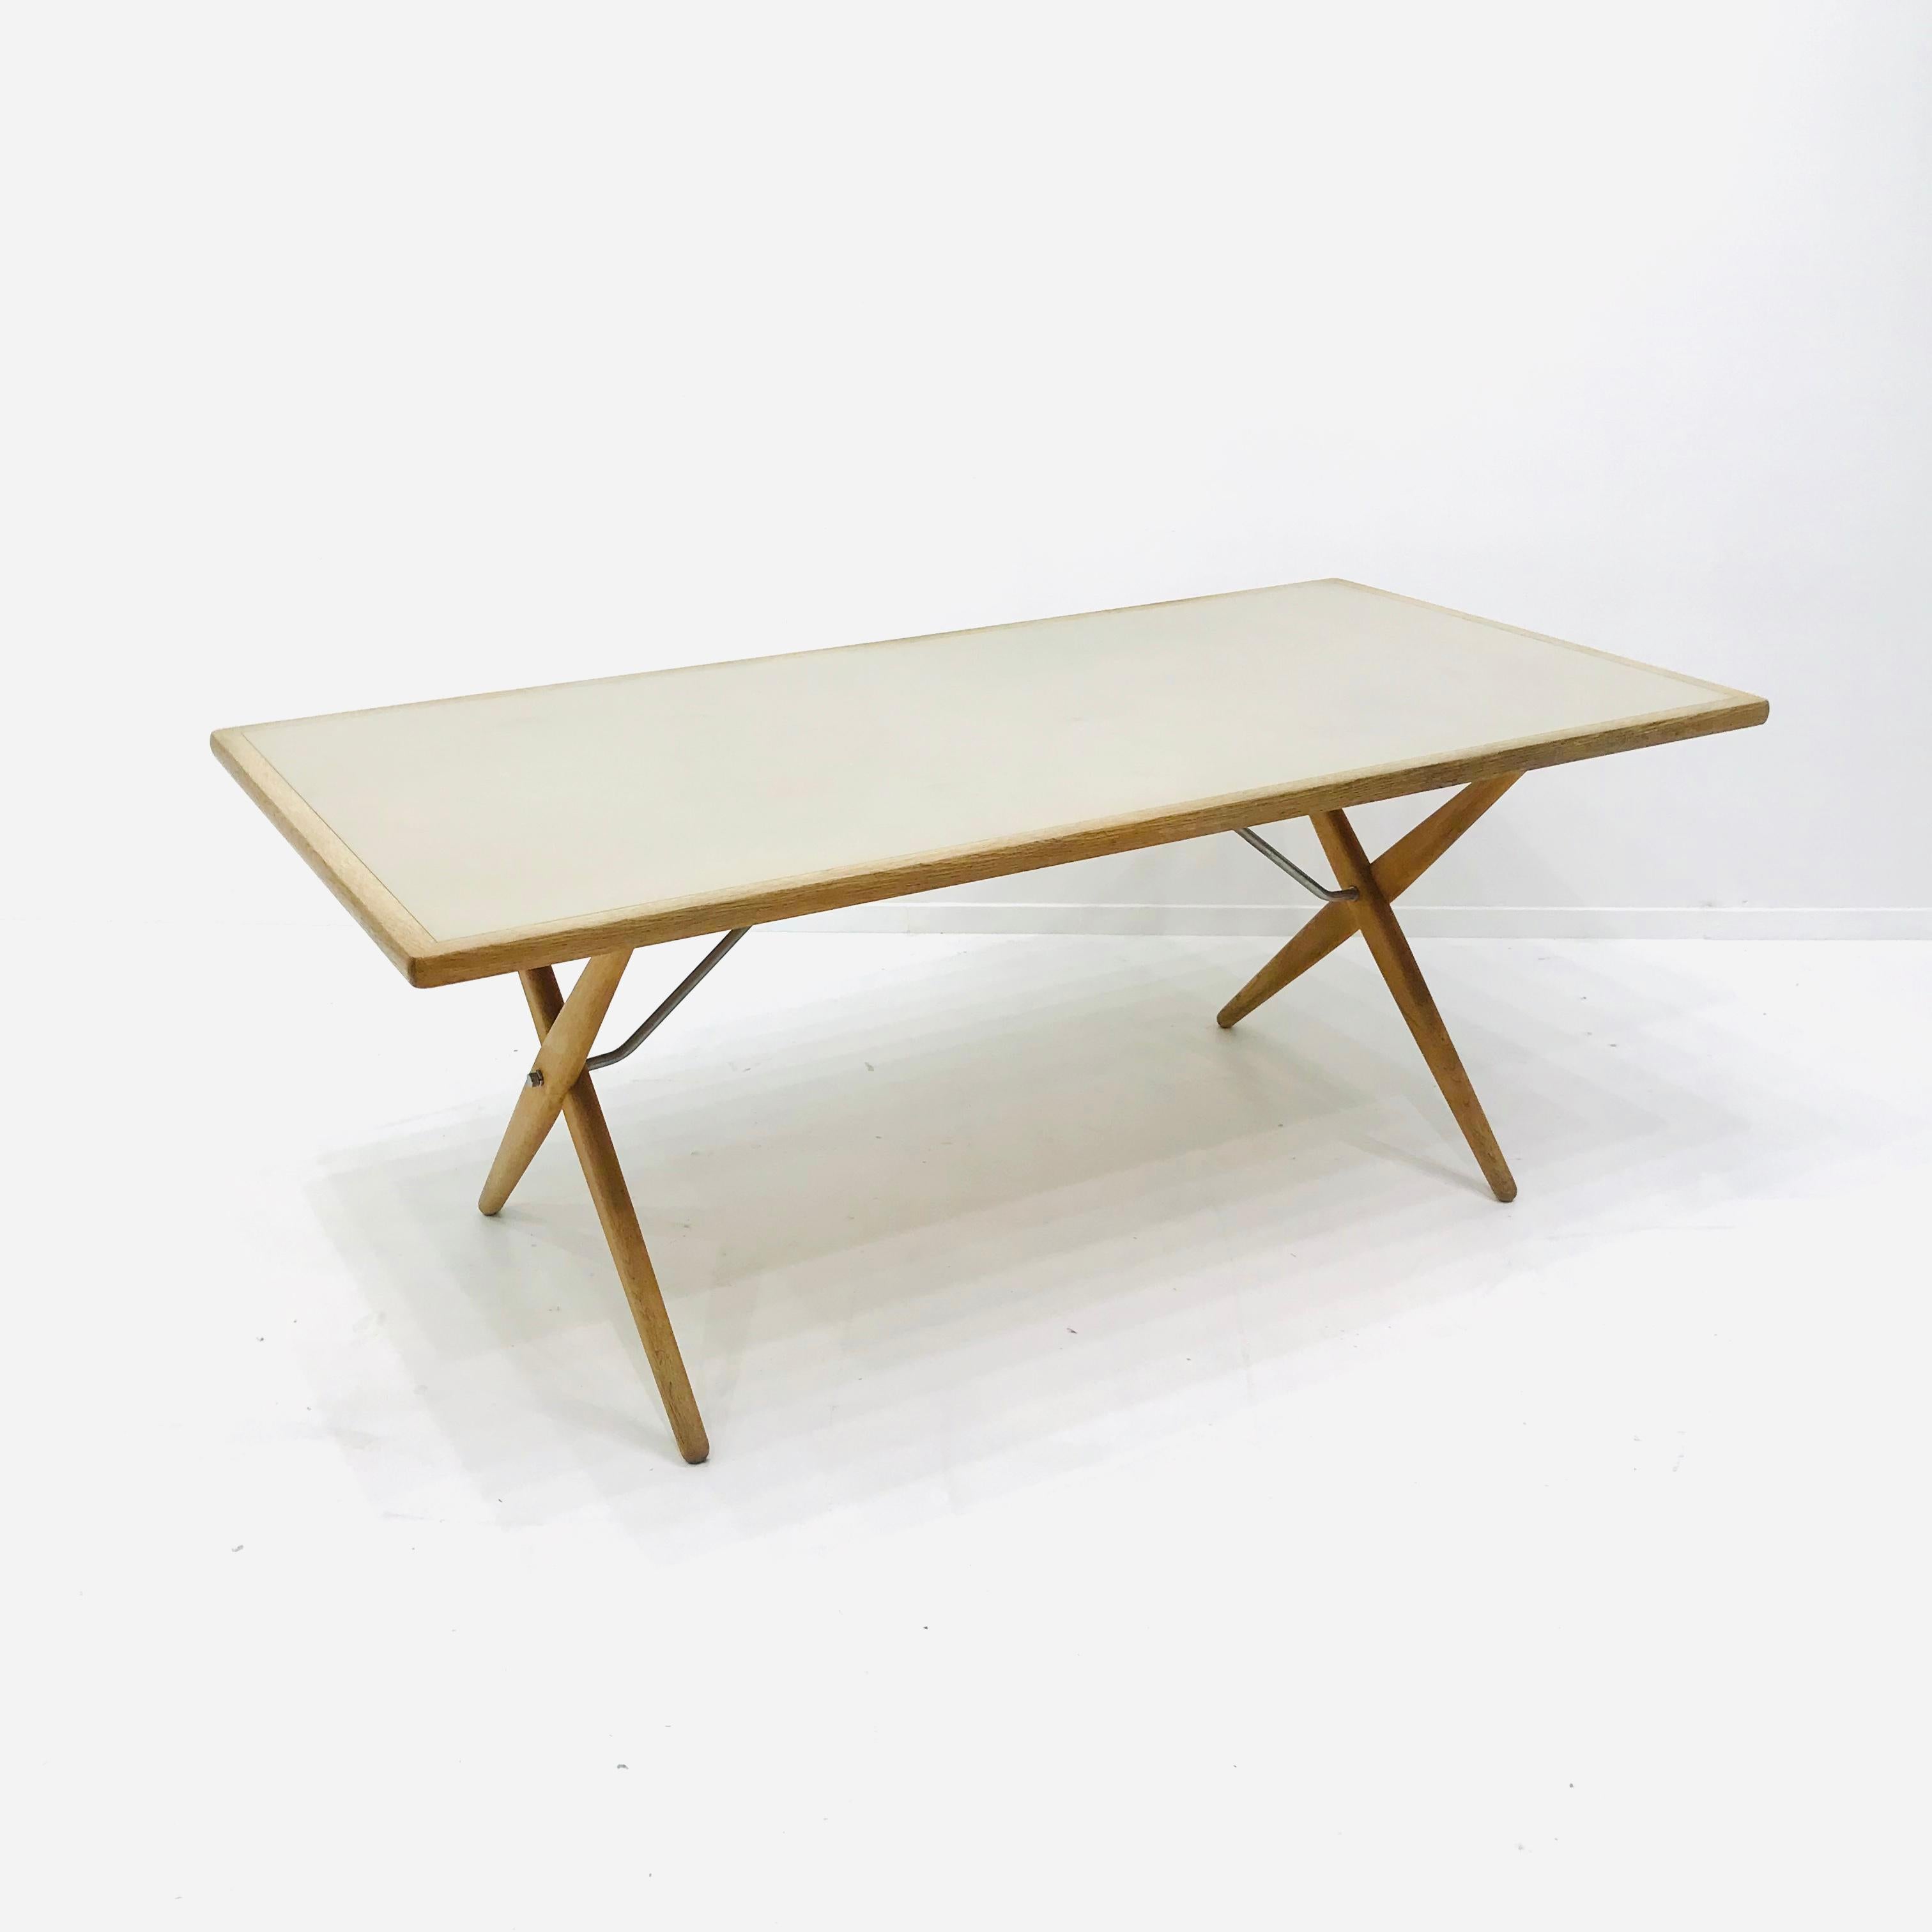 Danish Midcentury Crossed Legged Table AT303 by Hans J. Wegner for Andreas Tuck, 1950s For Sale